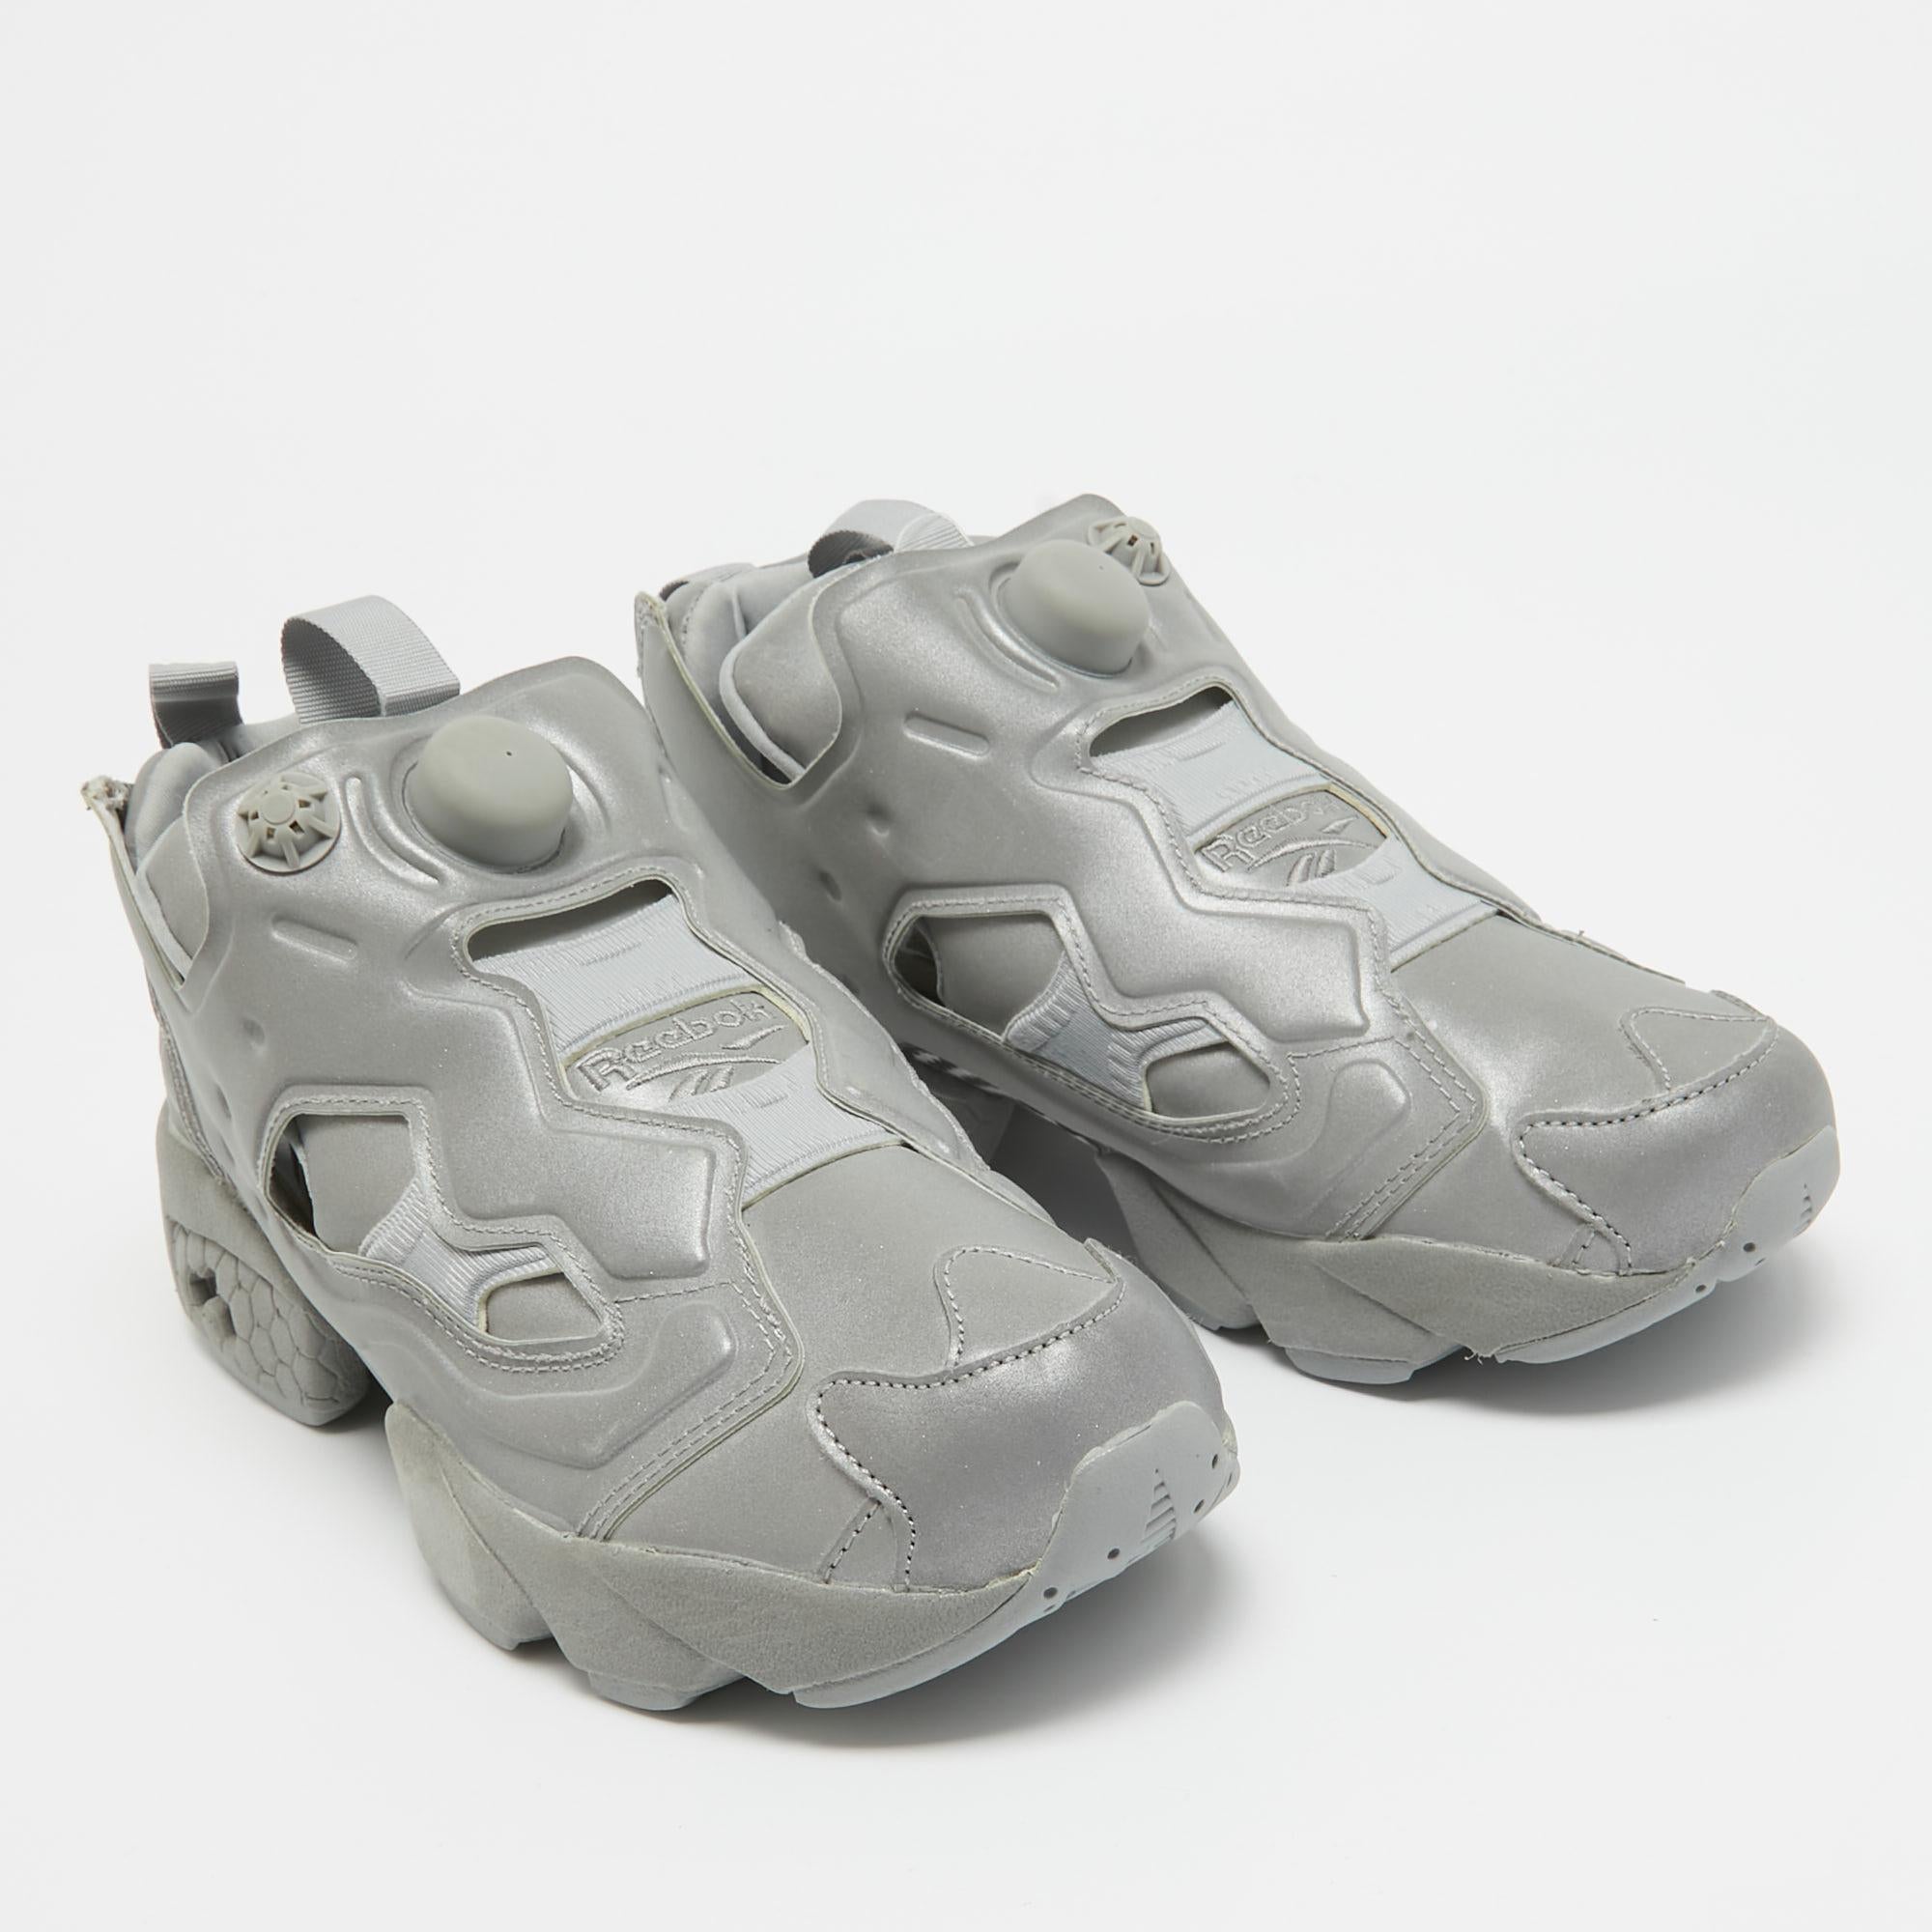 Women's Vetements x Reebok Grey Reflective Fabric Instapump Fury Sneakers Size 38.5 For Sale